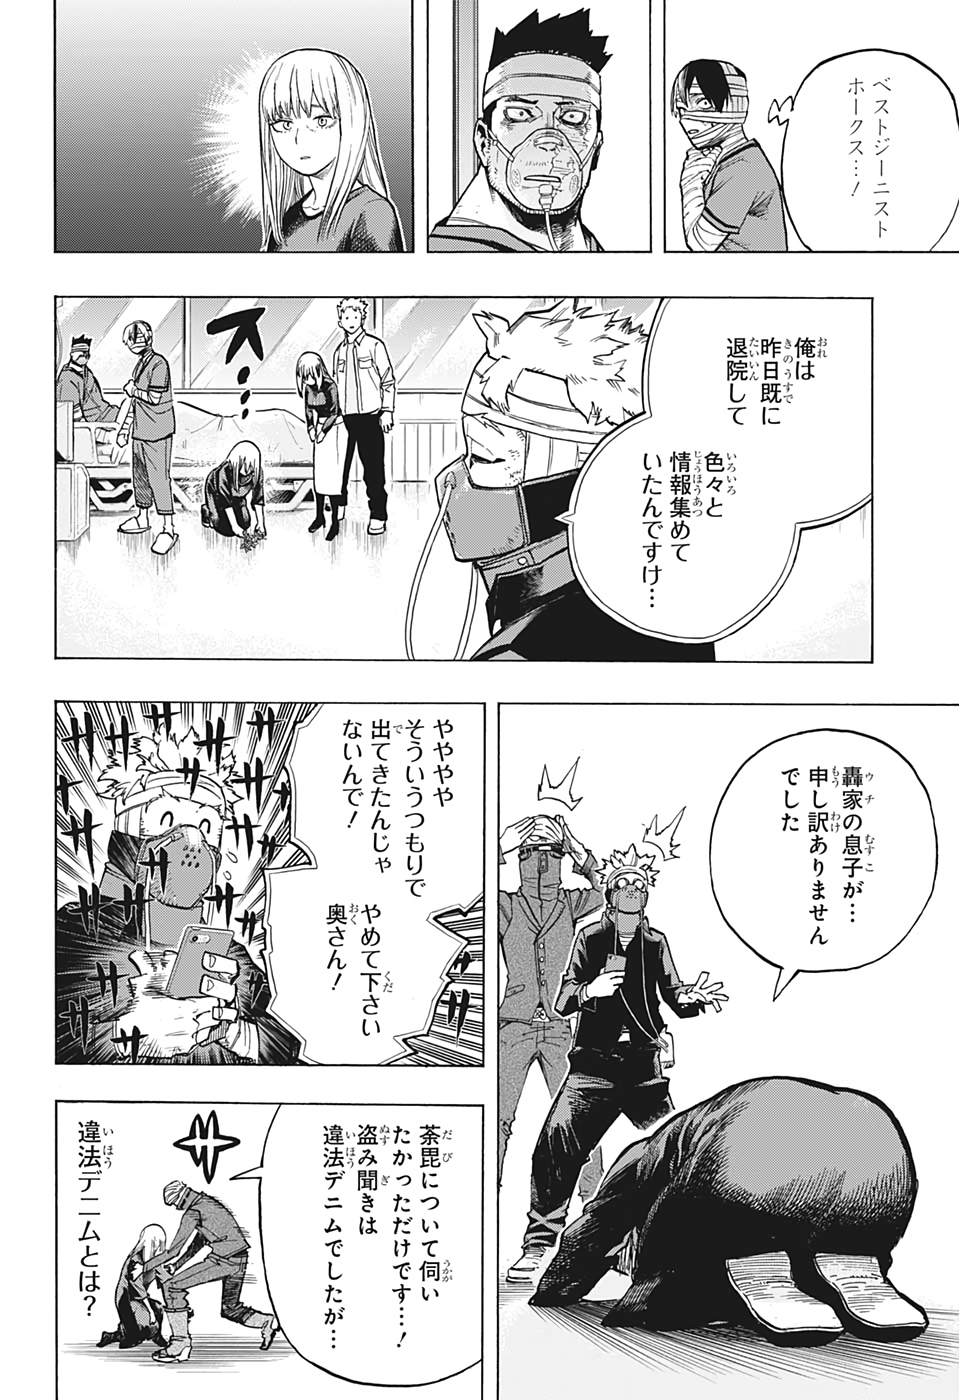 Boku no Hero Academia - Chapter 303 - Page 2